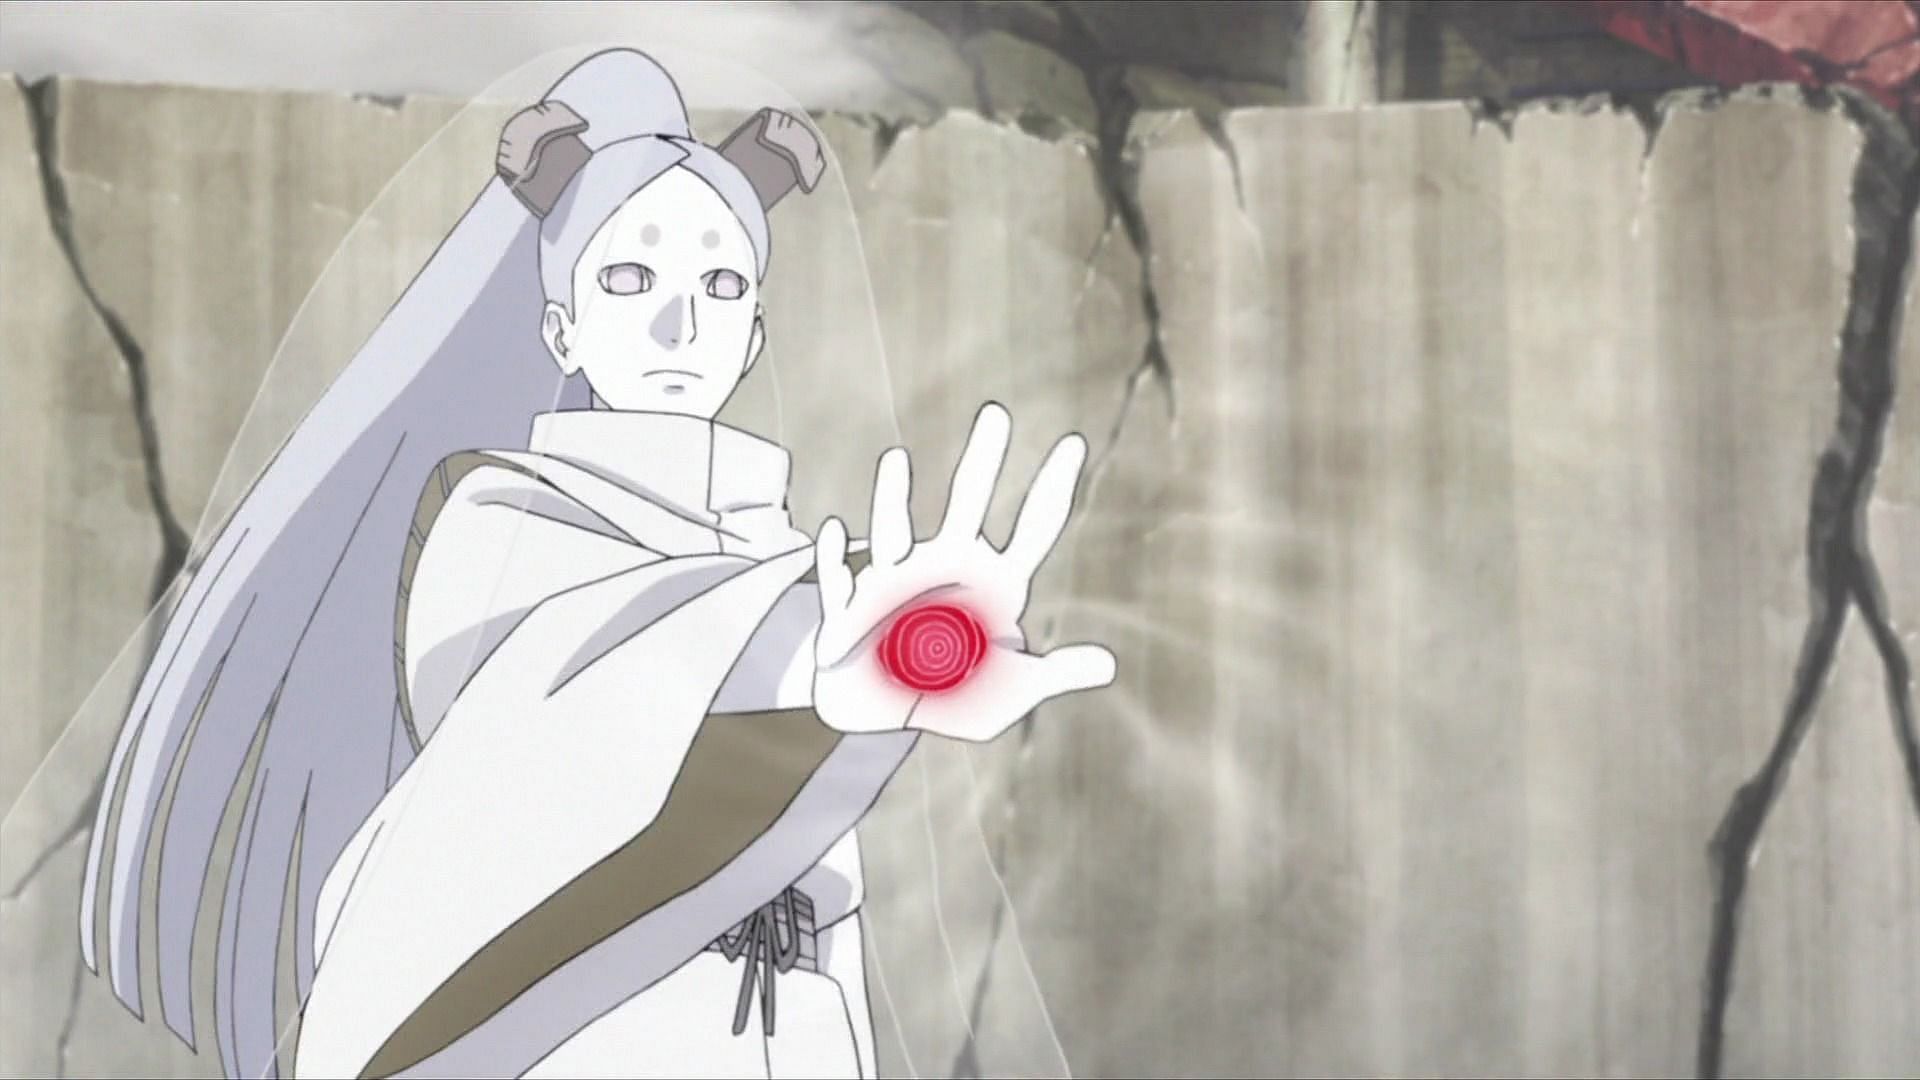 Momoshiki as seen in Boruto anime (Image via Studio Pierrot)